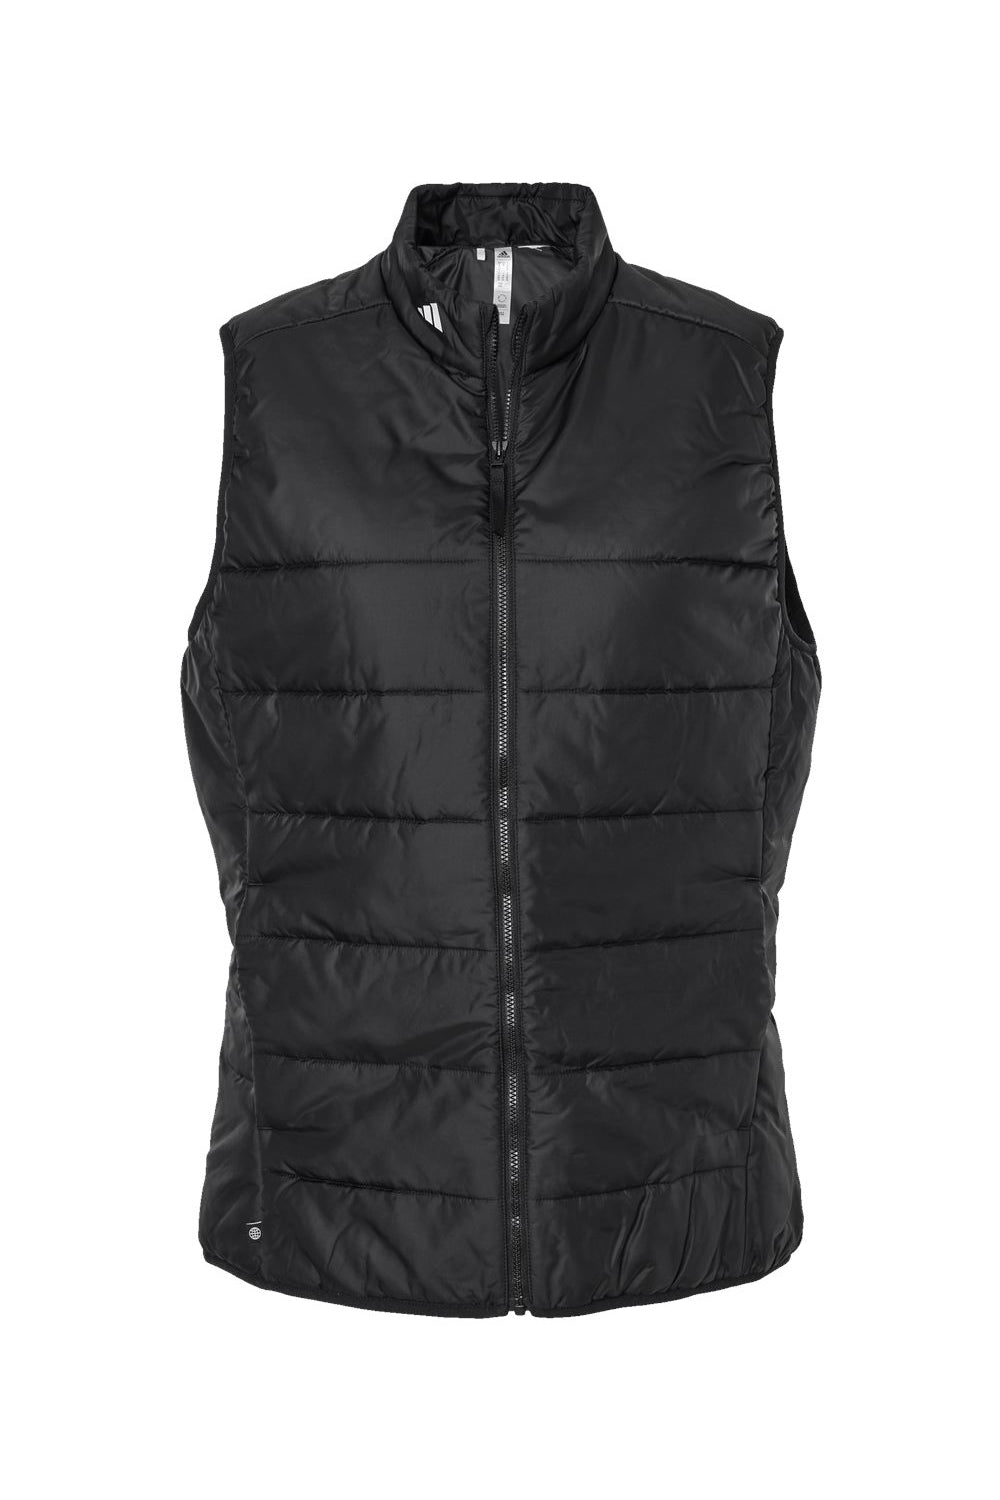 Adidas A573 Womens Full Zip Puffer Vest Black Flat Front